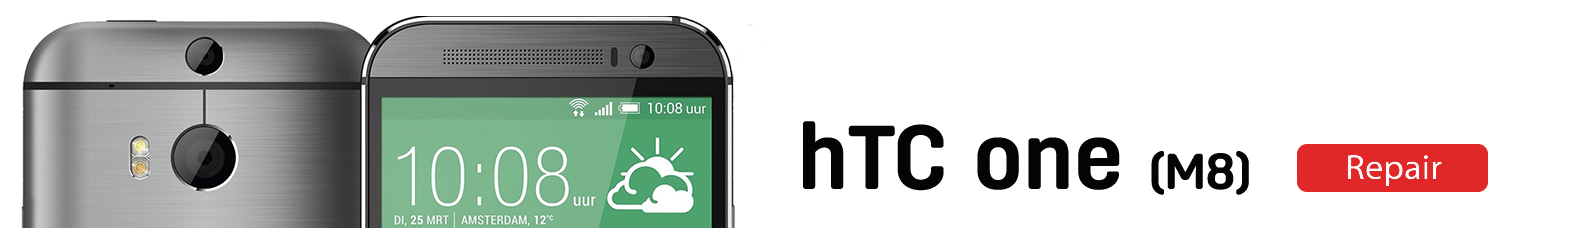 htcM8v2 HTC One M8 Repairs